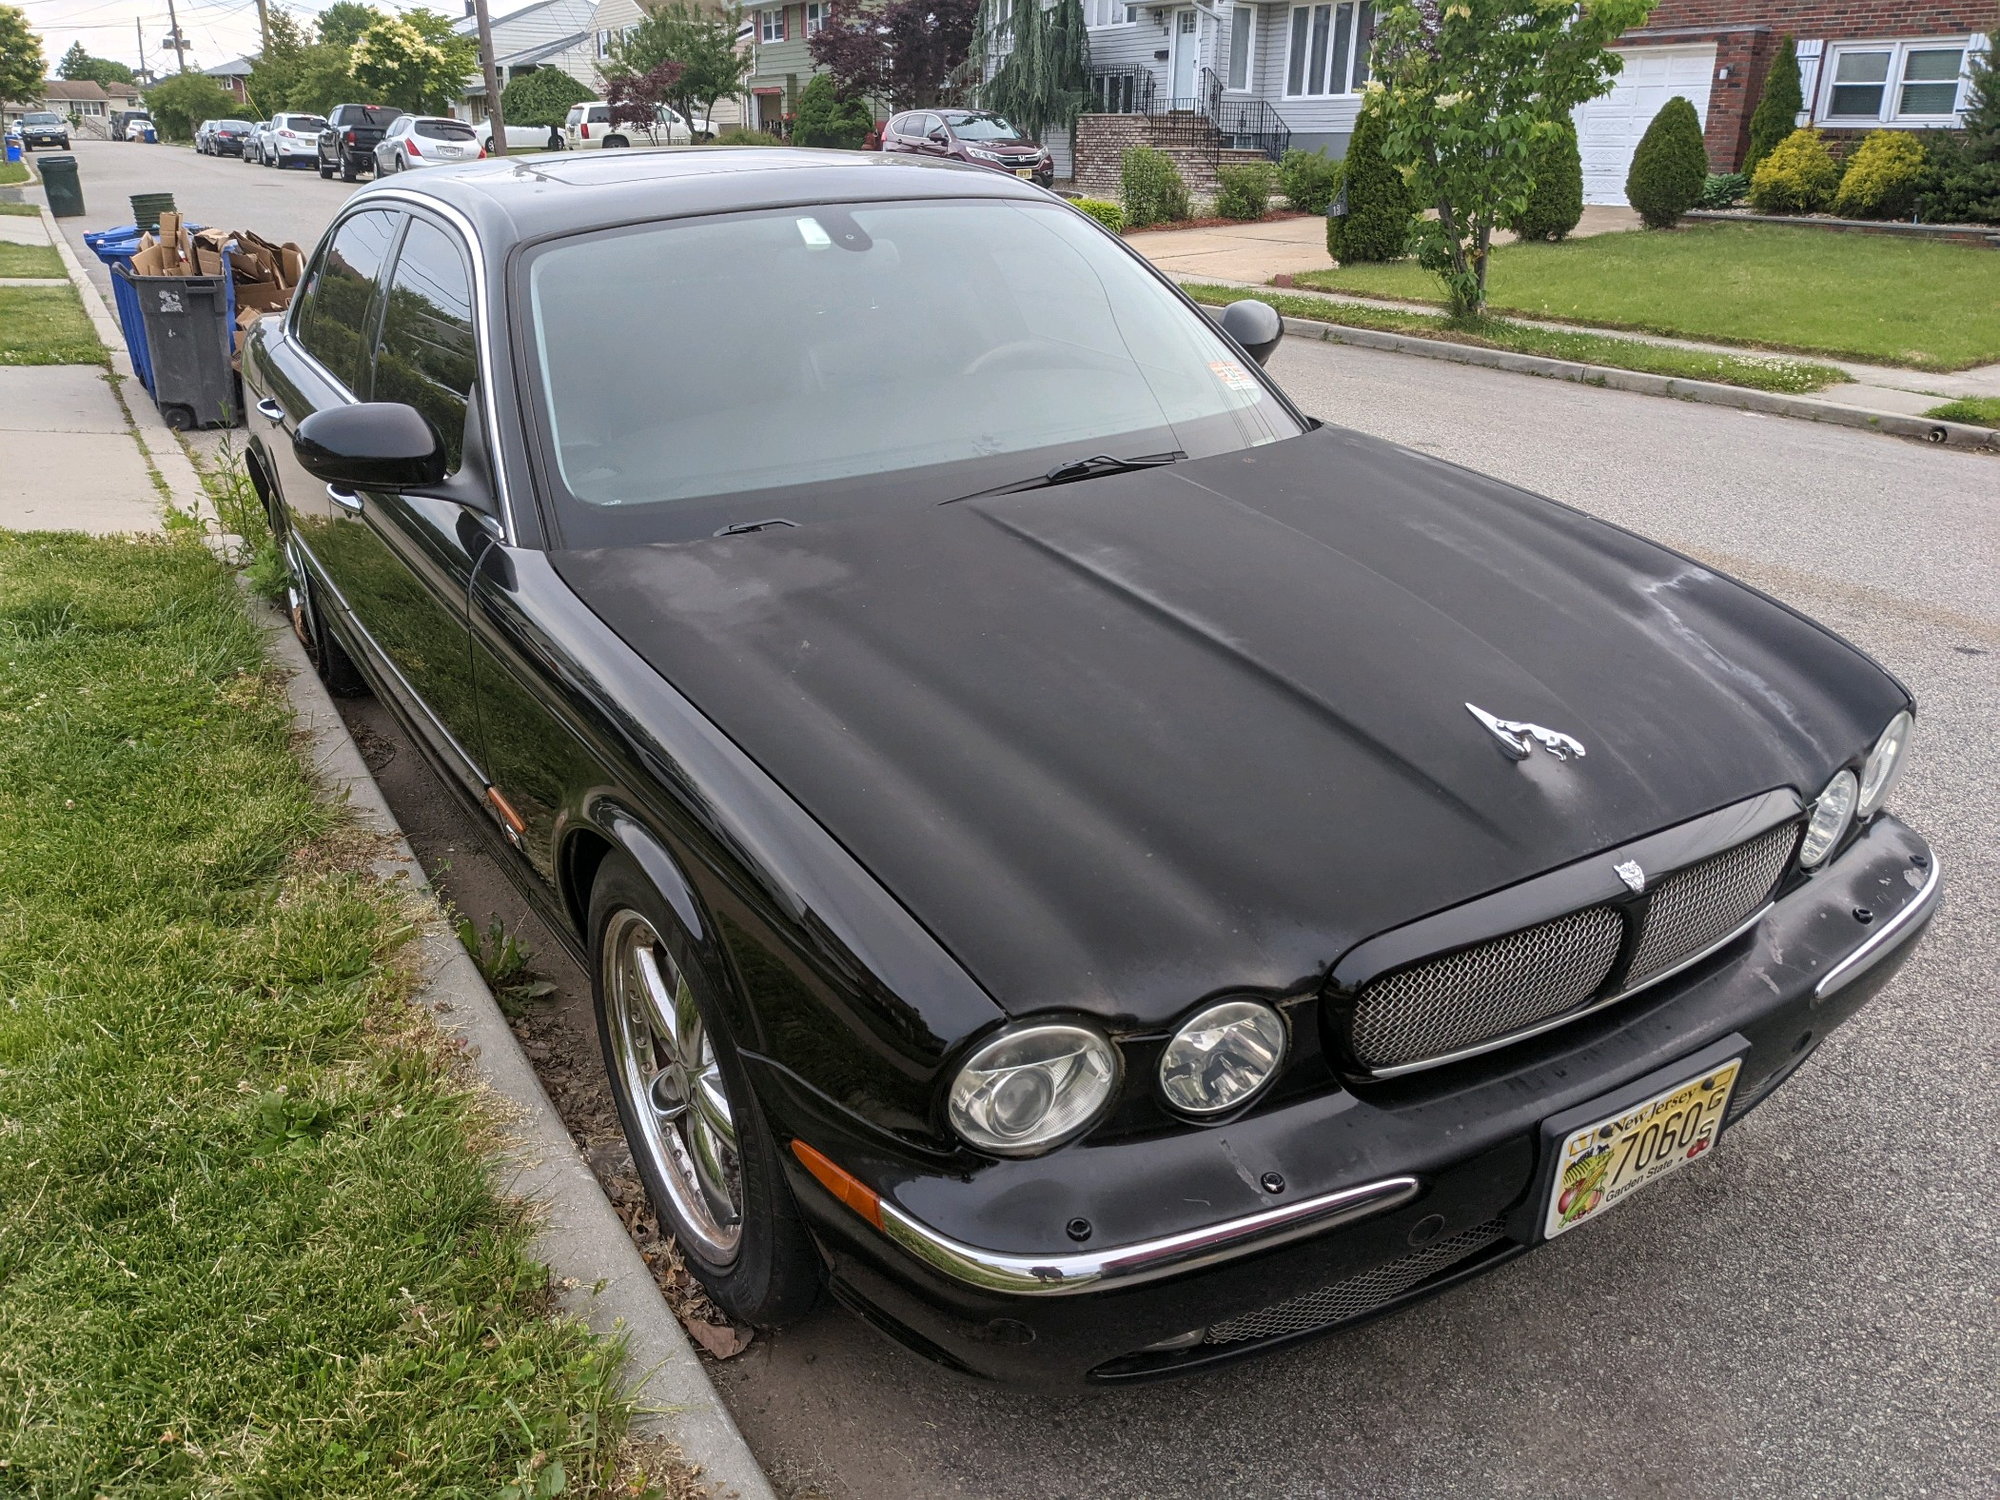 2005 Jaguar XJR - 2005 XJR for restoration or parts - Used - VIN SAJWA73B25TG41254 - 175,000 Miles - 8 cyl - 2WD - Automatic - Sedan - Black - Carteret, NJ 07008, United States